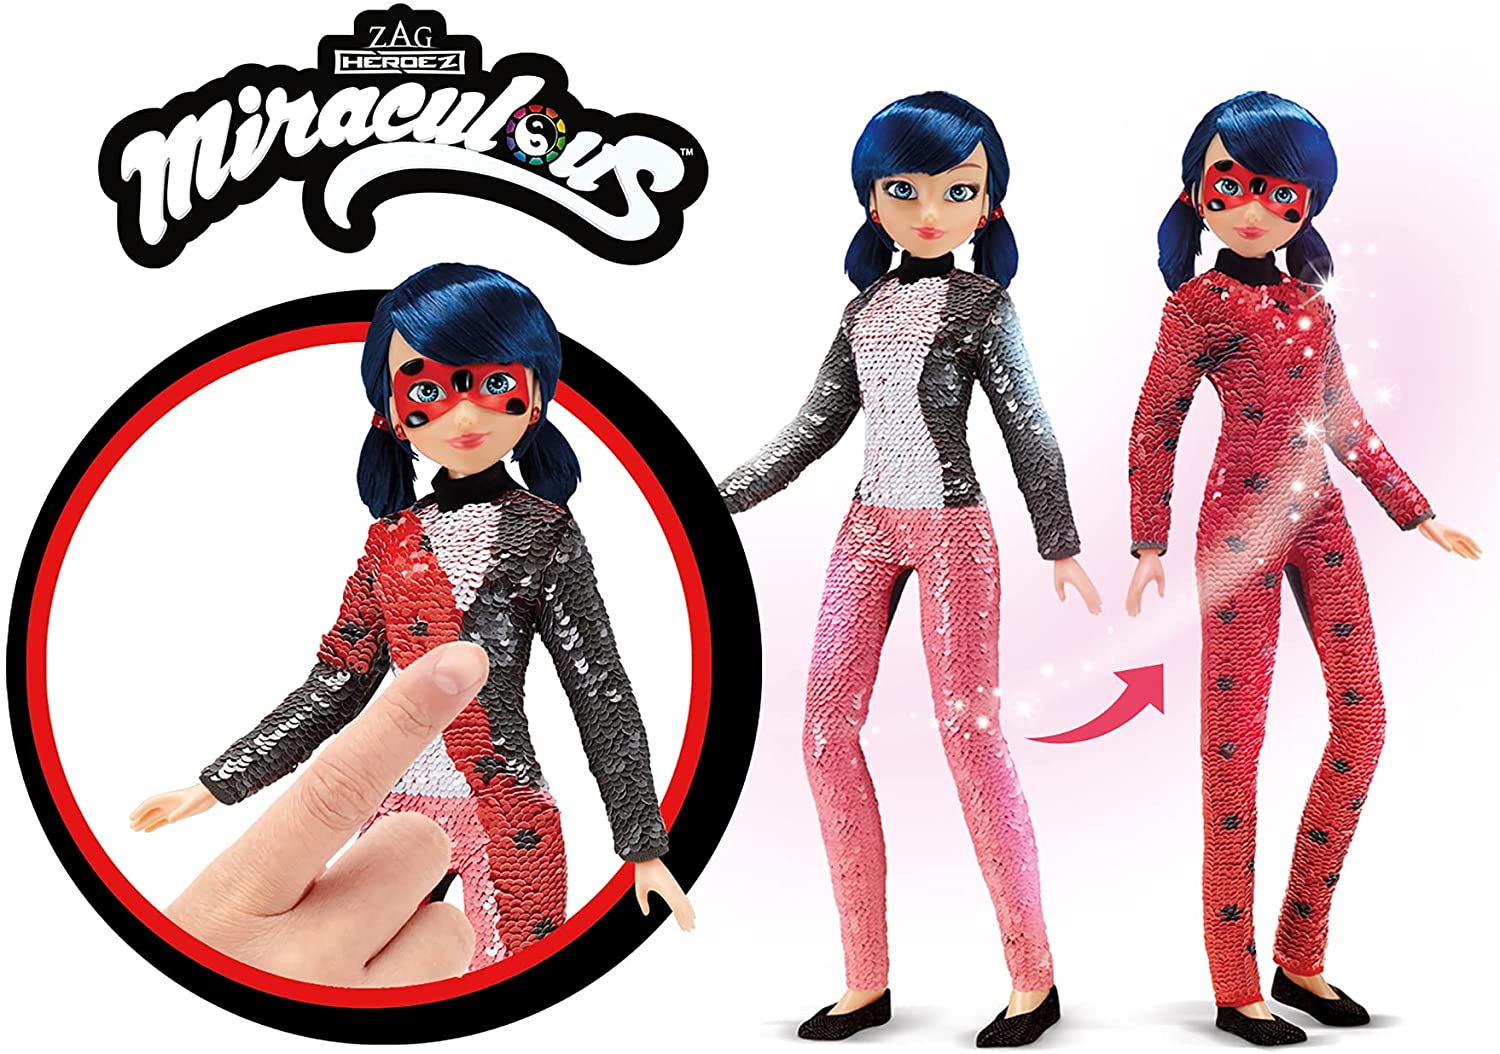 New Miraculous Dolls made by Playmates Toys : r/miraculousladybug